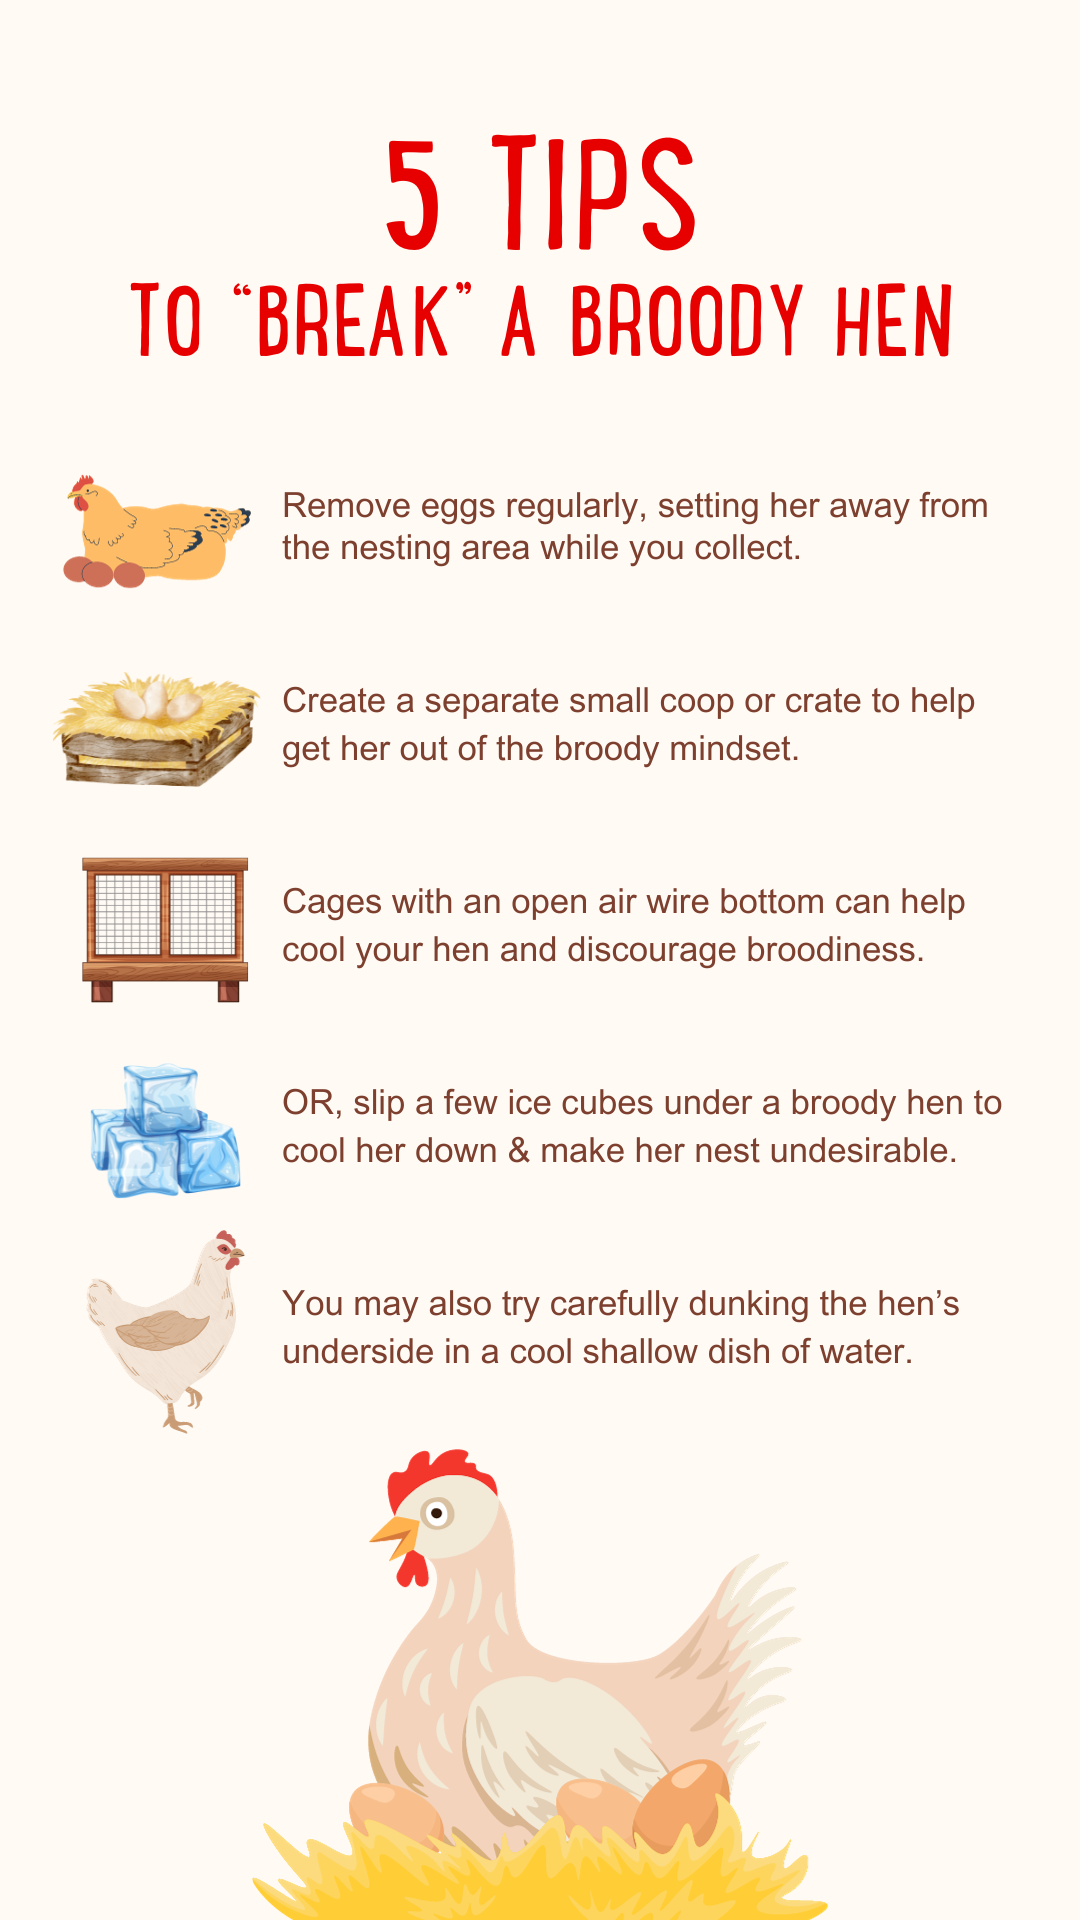 5 tips to break a broody hen